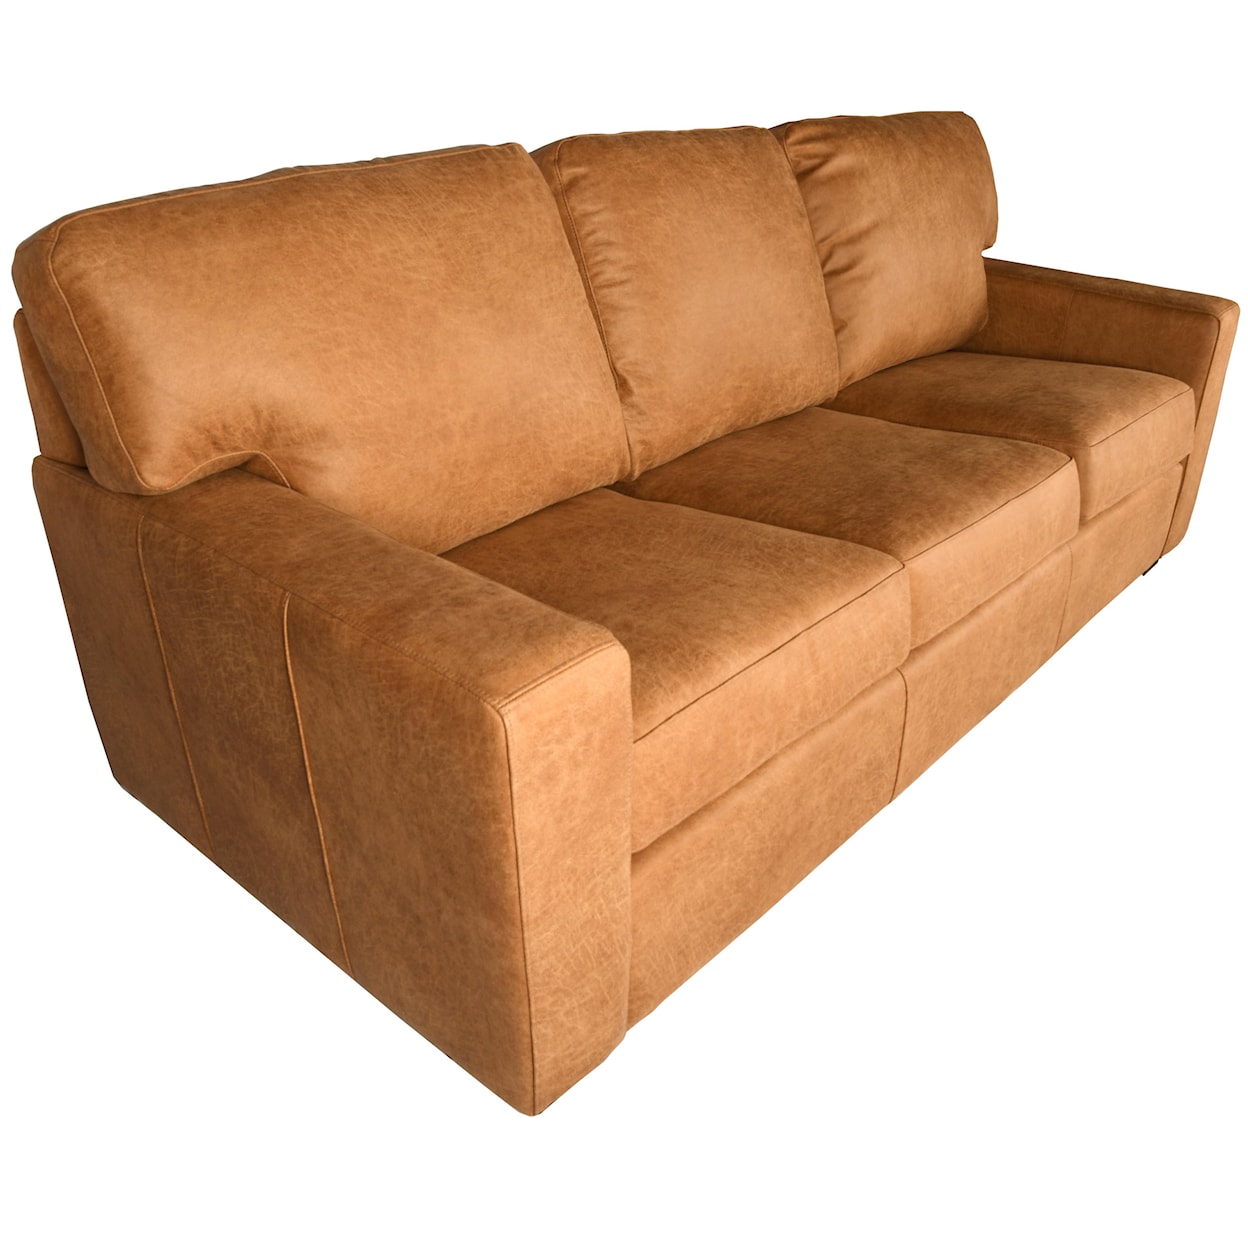 Castleridge Leather Mine by Design Leather Sofa